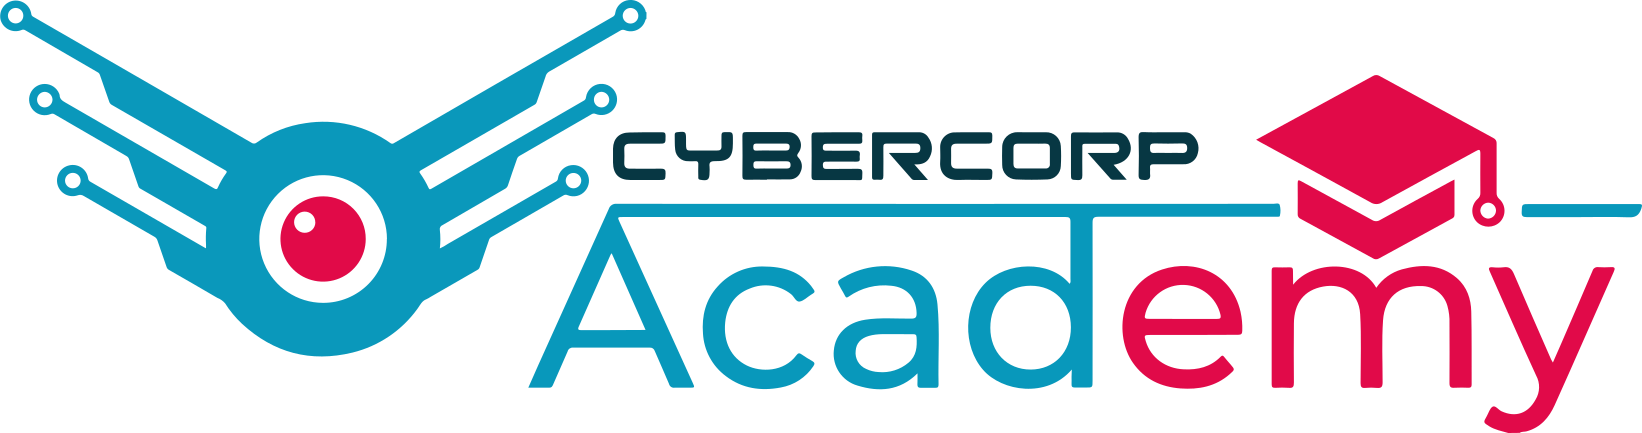 Cybercorp Academy